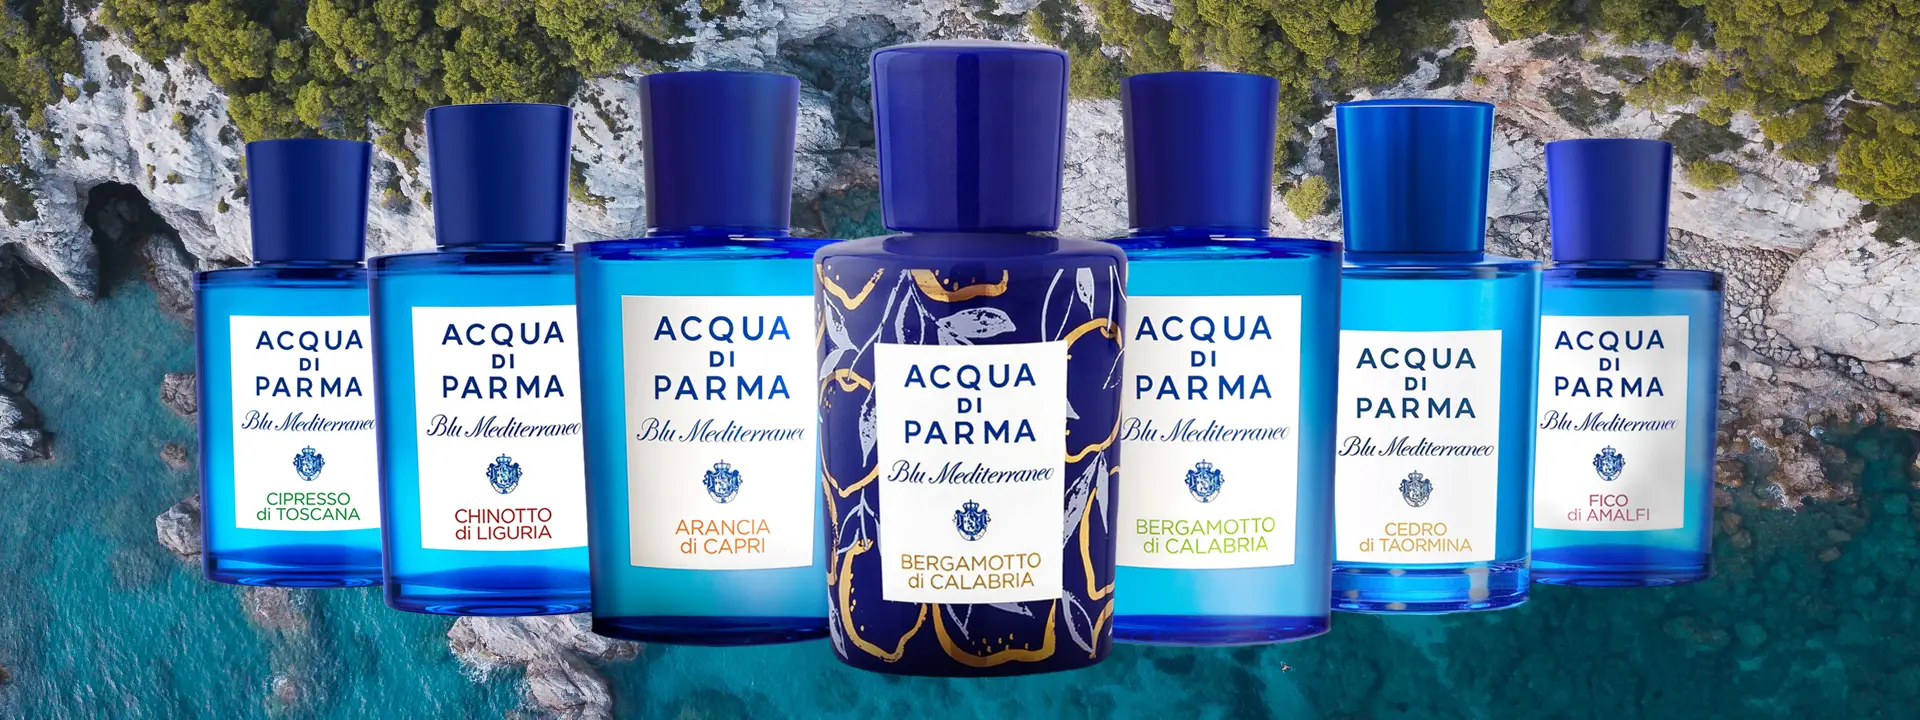 A Guide To The Acqua di Parma Blu Mediterraneo Fragrances